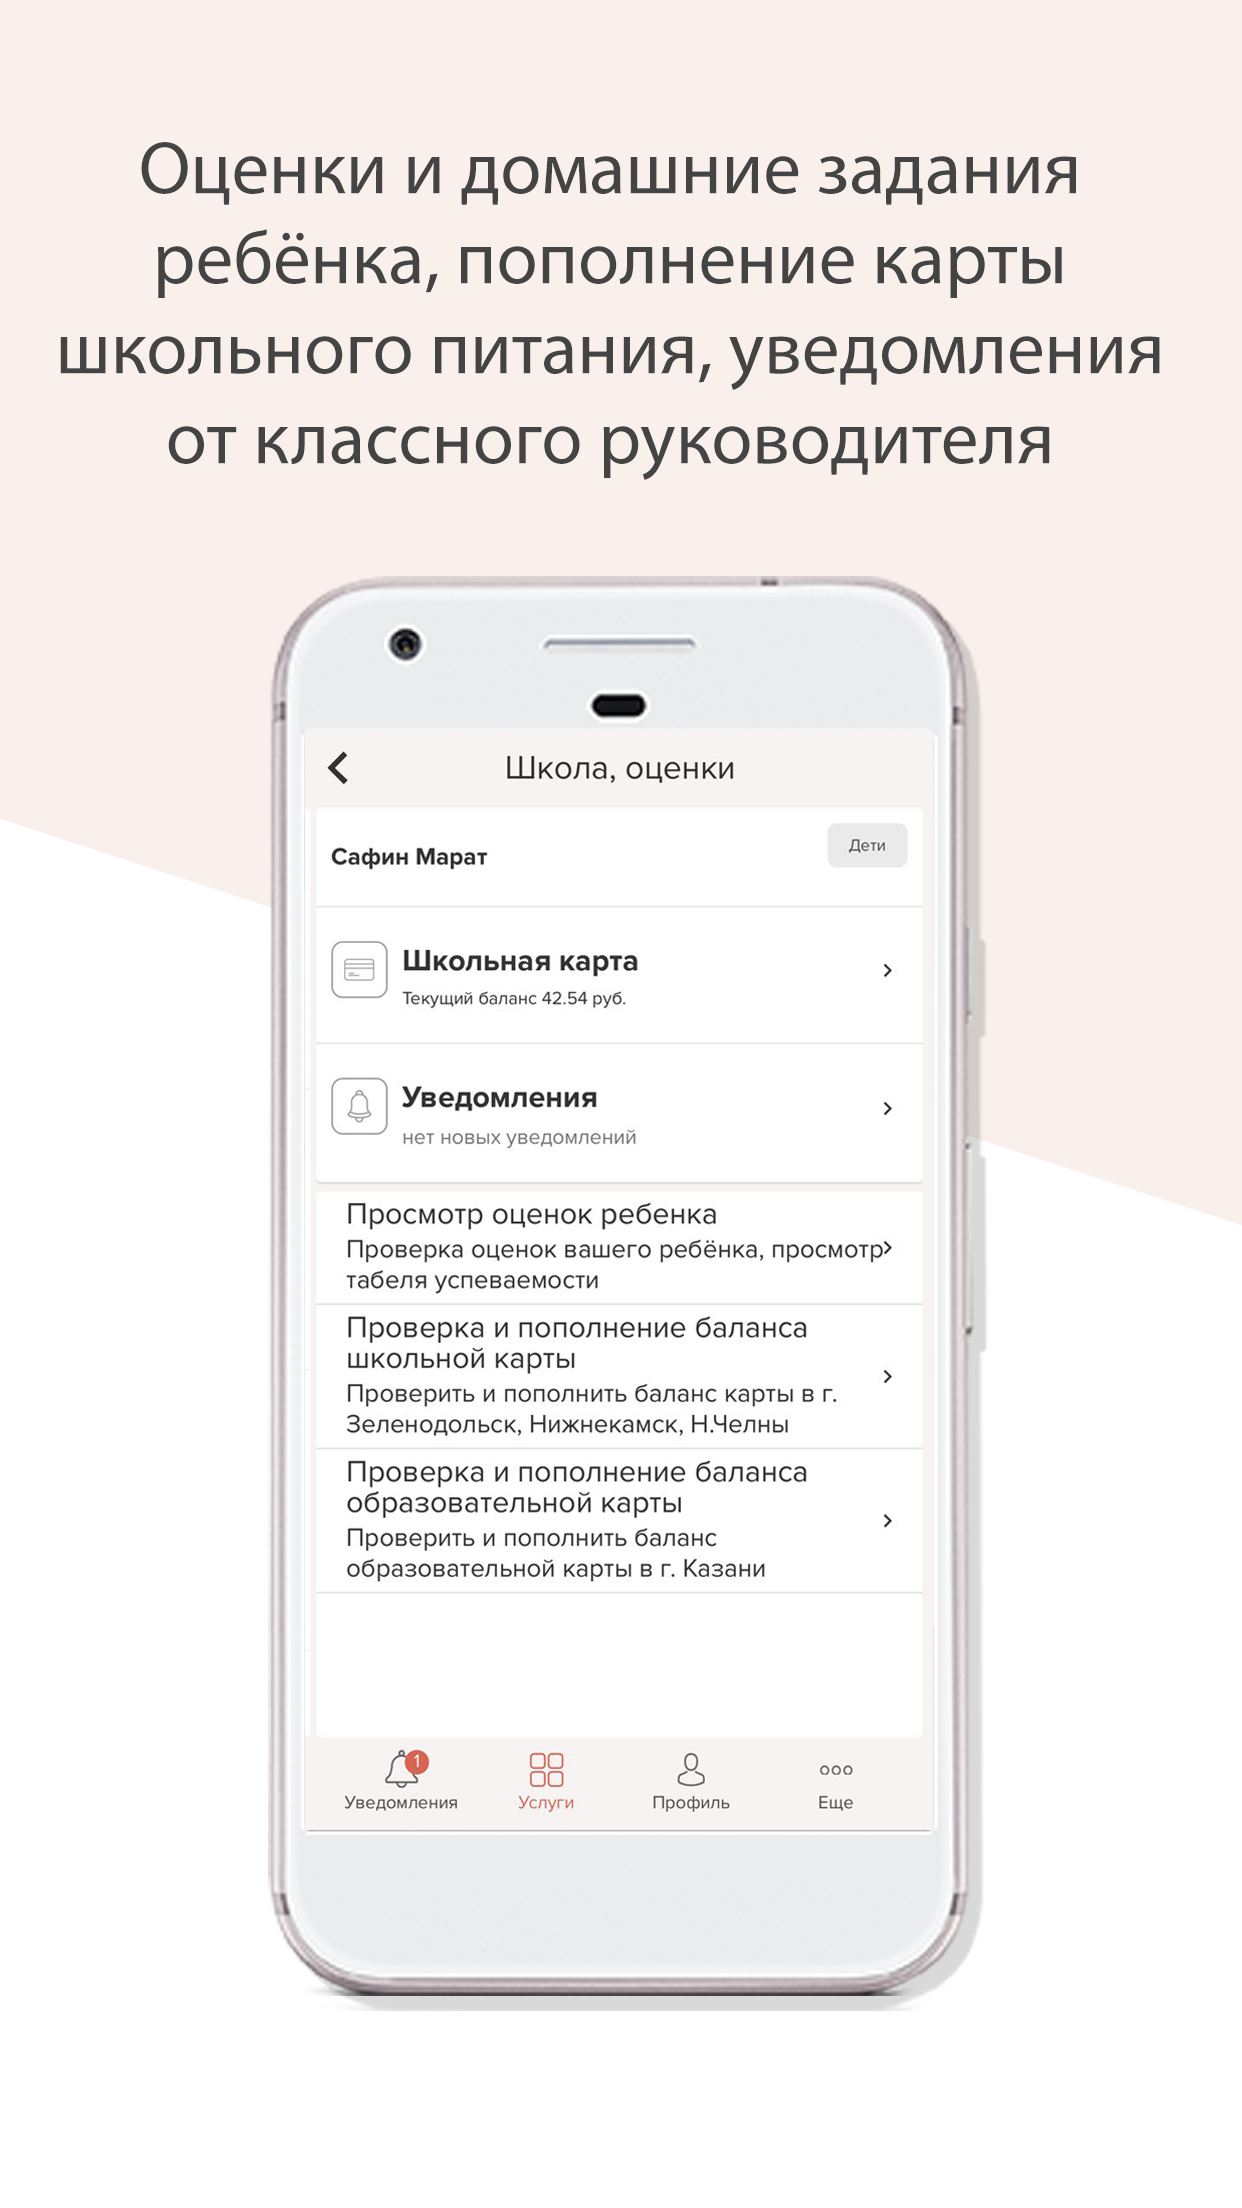 Android application Услуги РТ screenshort